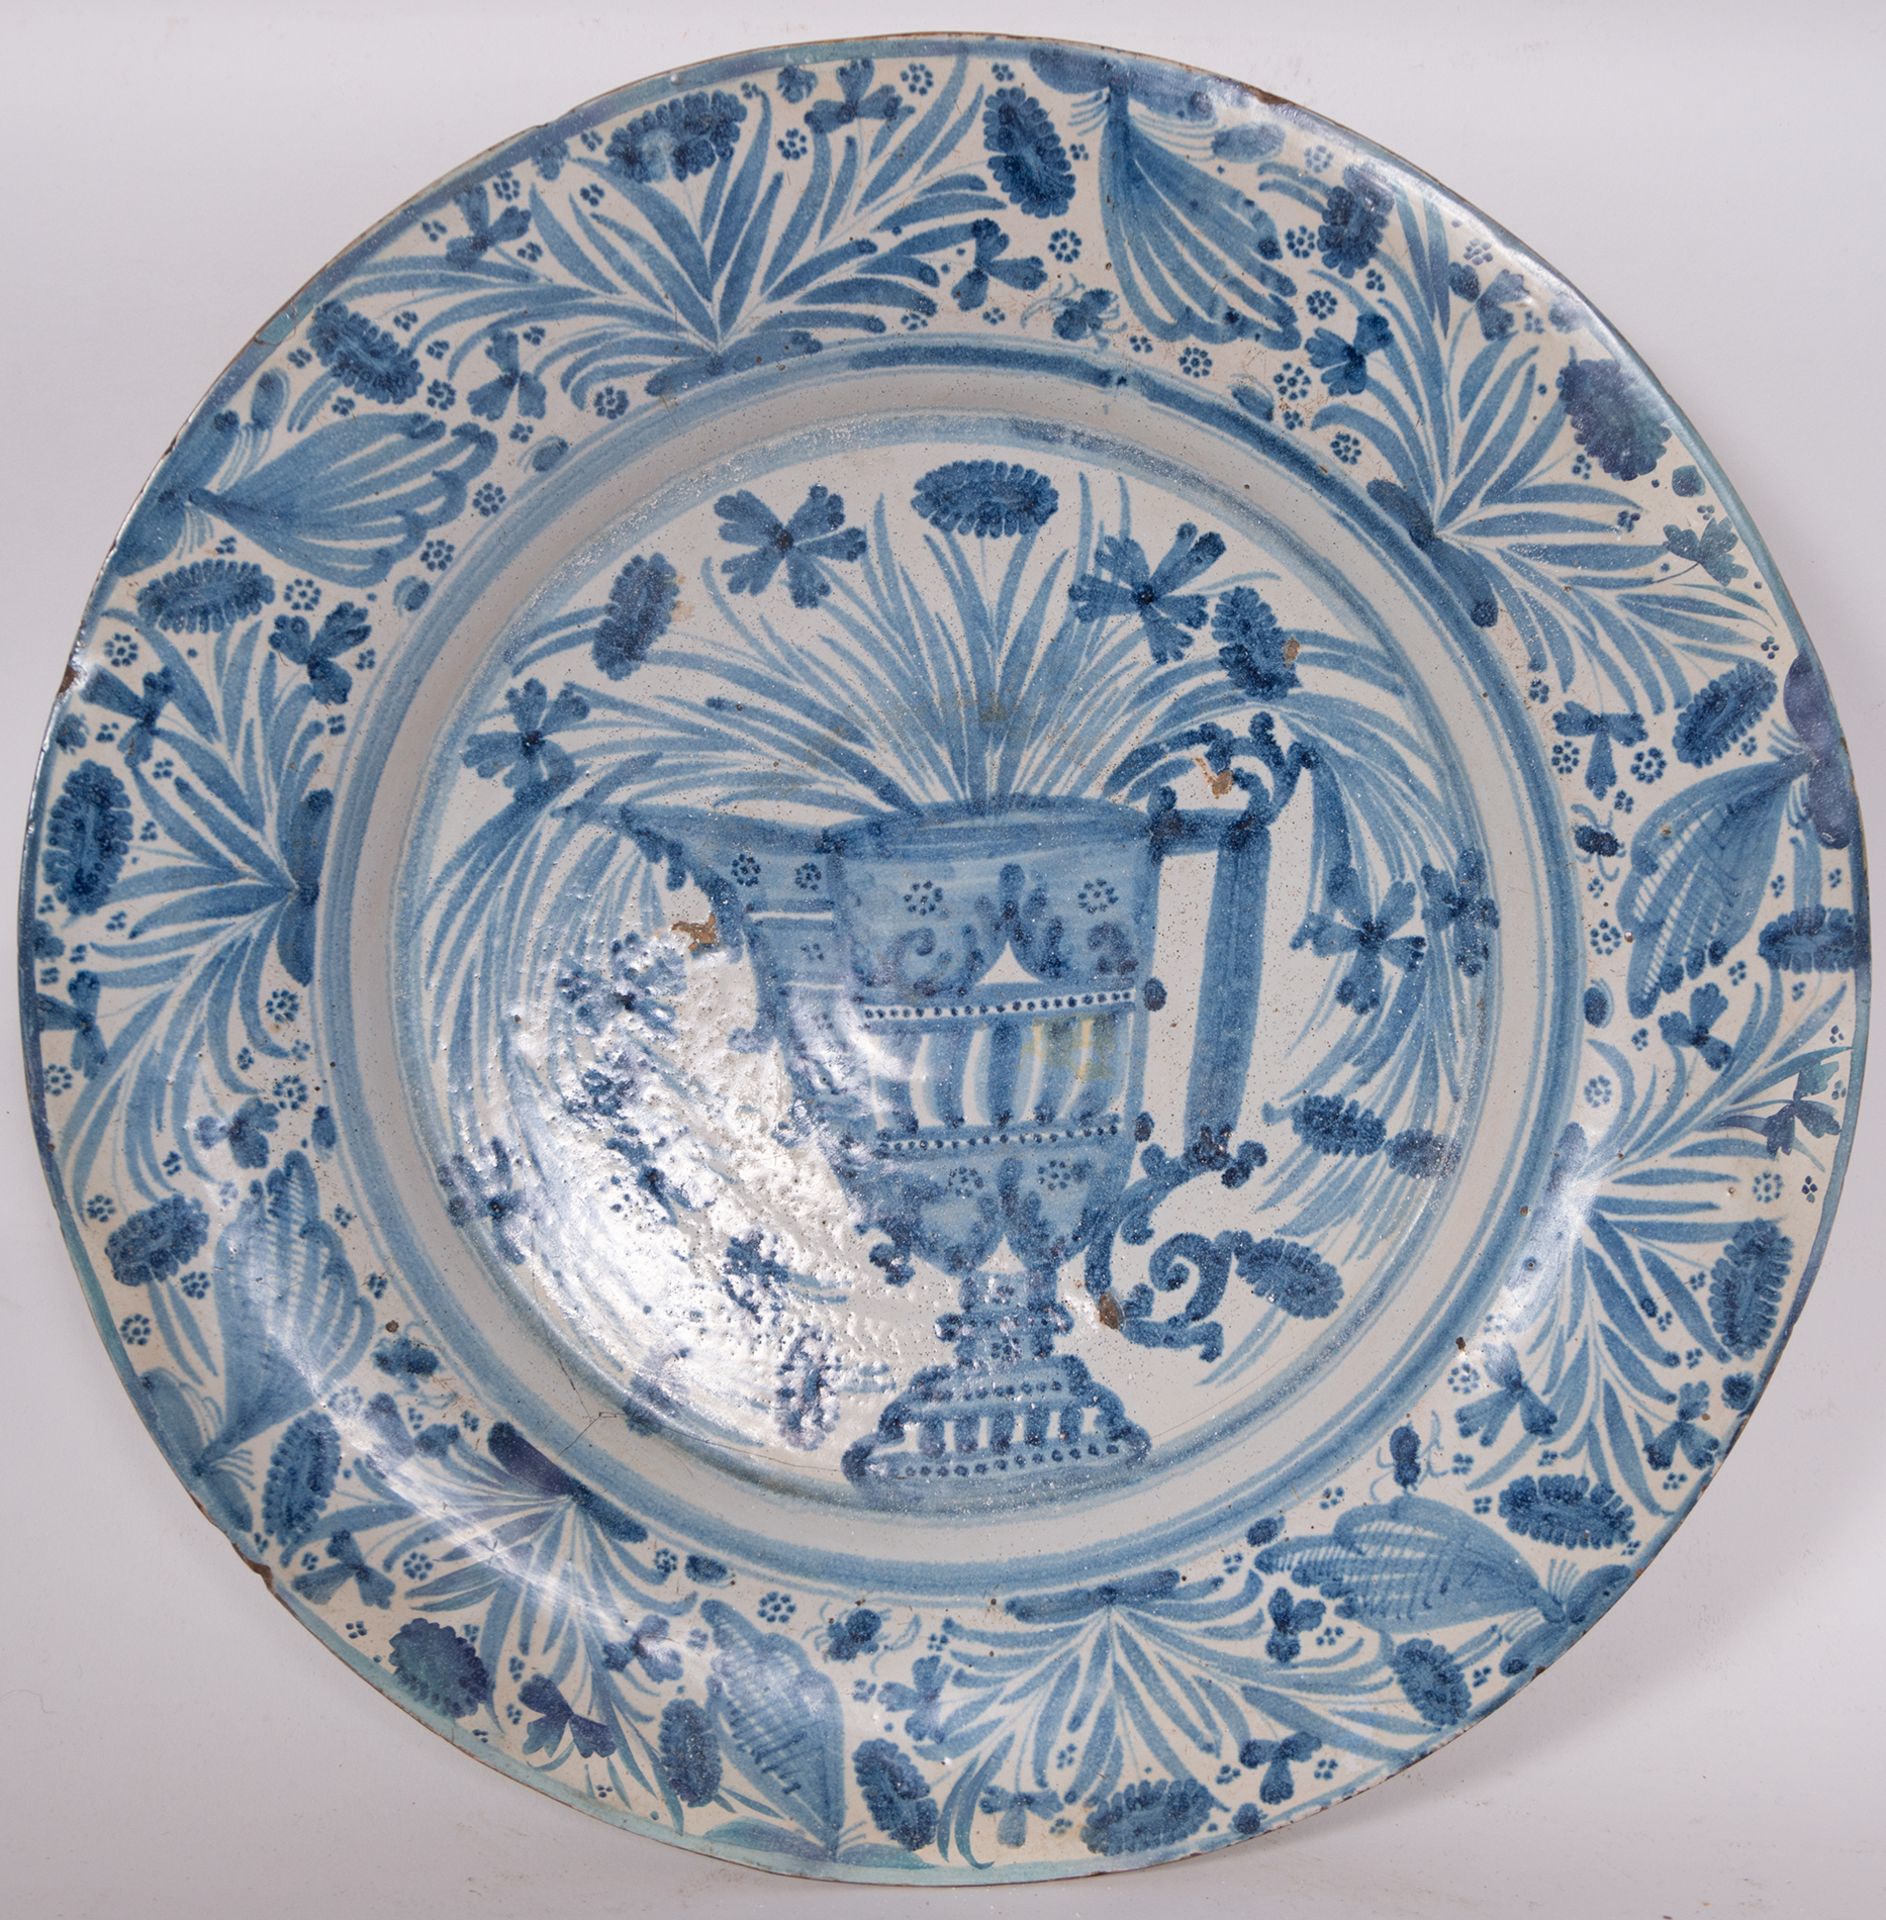 Large Talavera Ceramic Plate, 17th century